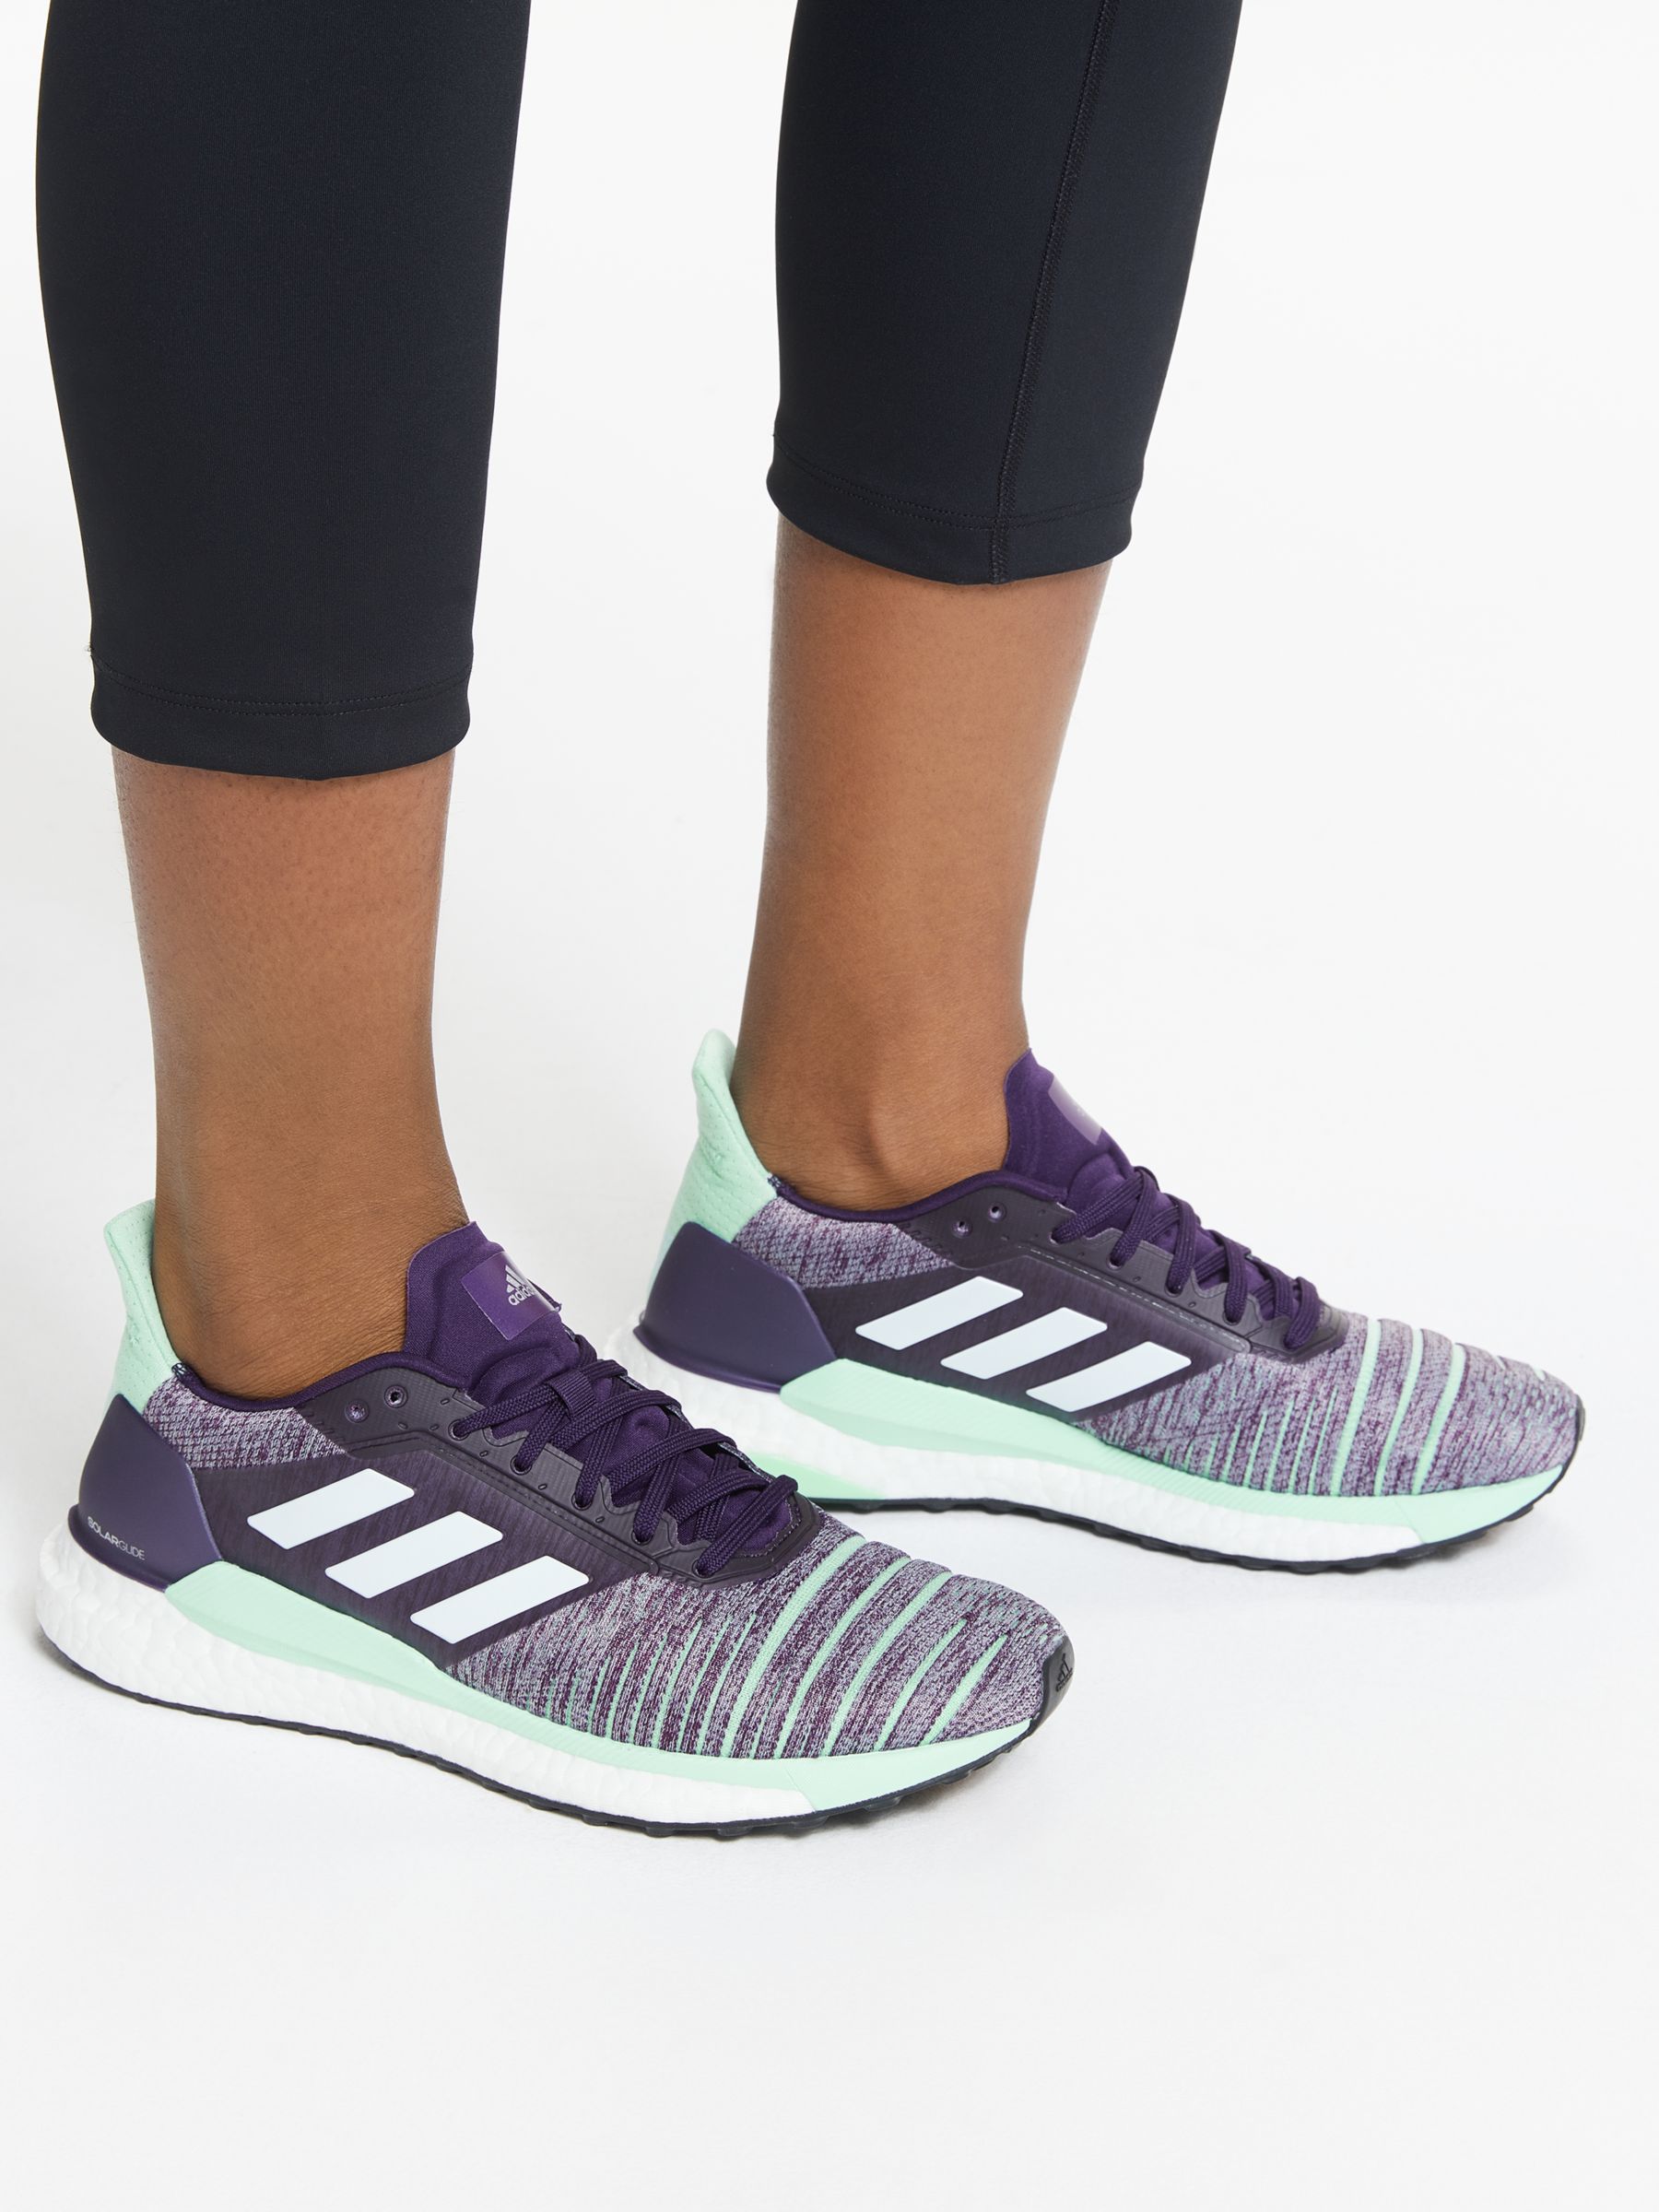 adidas solar ride ladies running shoes